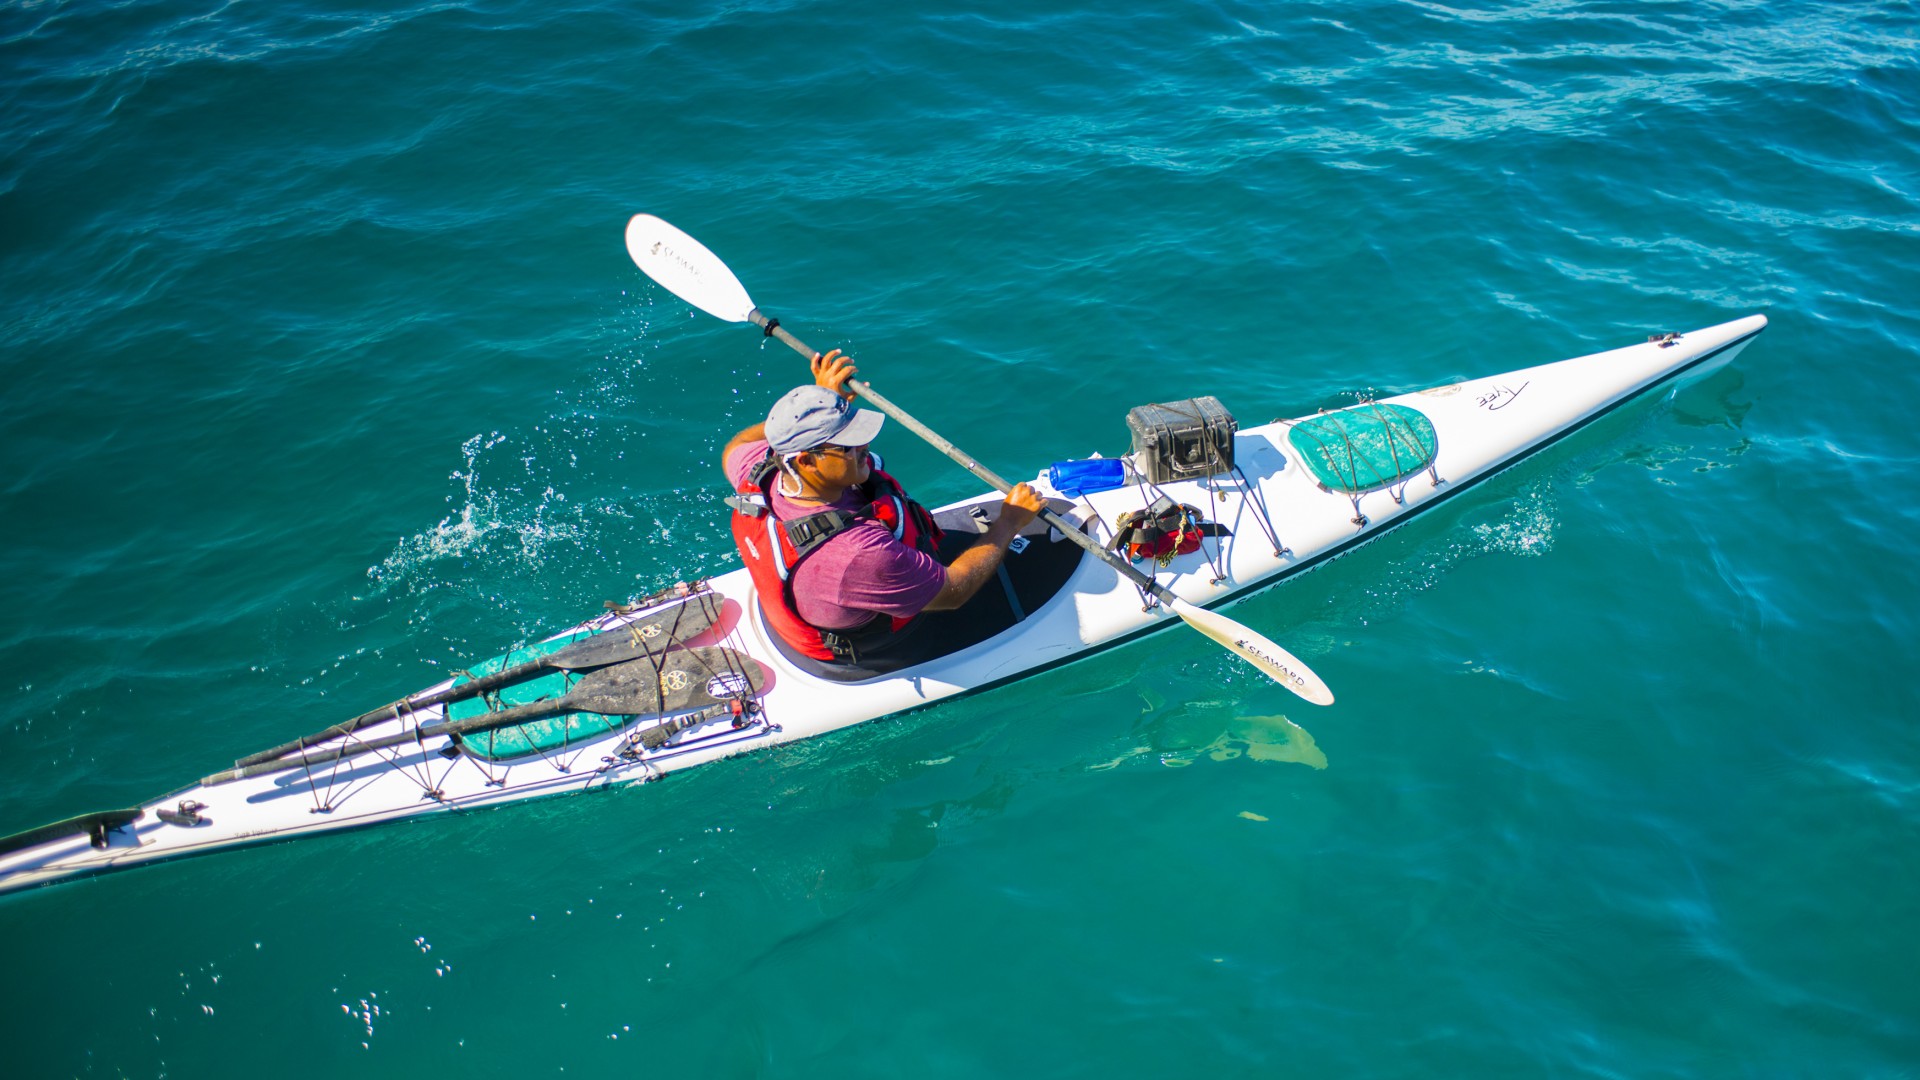 Birdseye view of a single kayaker paddling in Baja California Sur